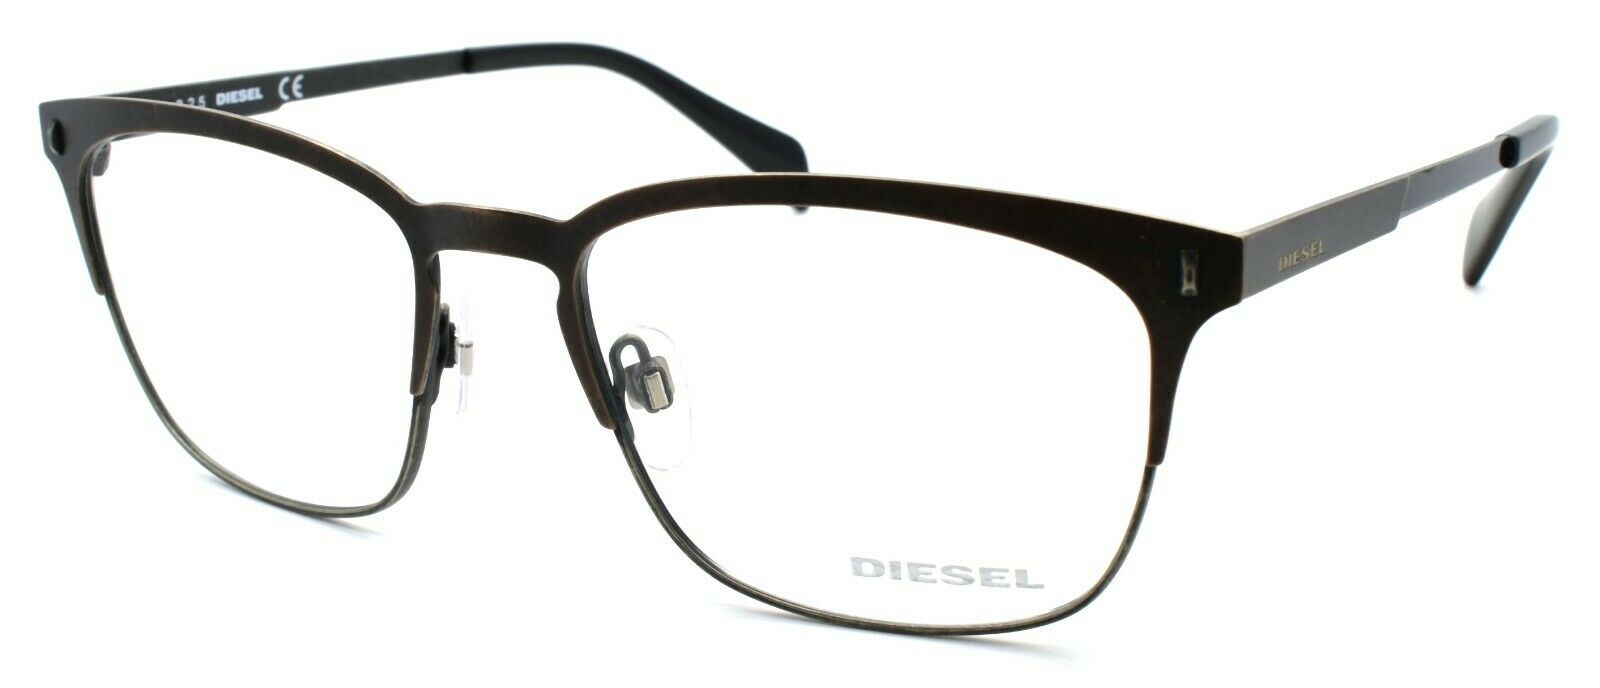 1-Diesel DL5121 038 Eyeglasses Frames Unisex 55-18-145 Vintage Bronze-664689666676-IKSpecs